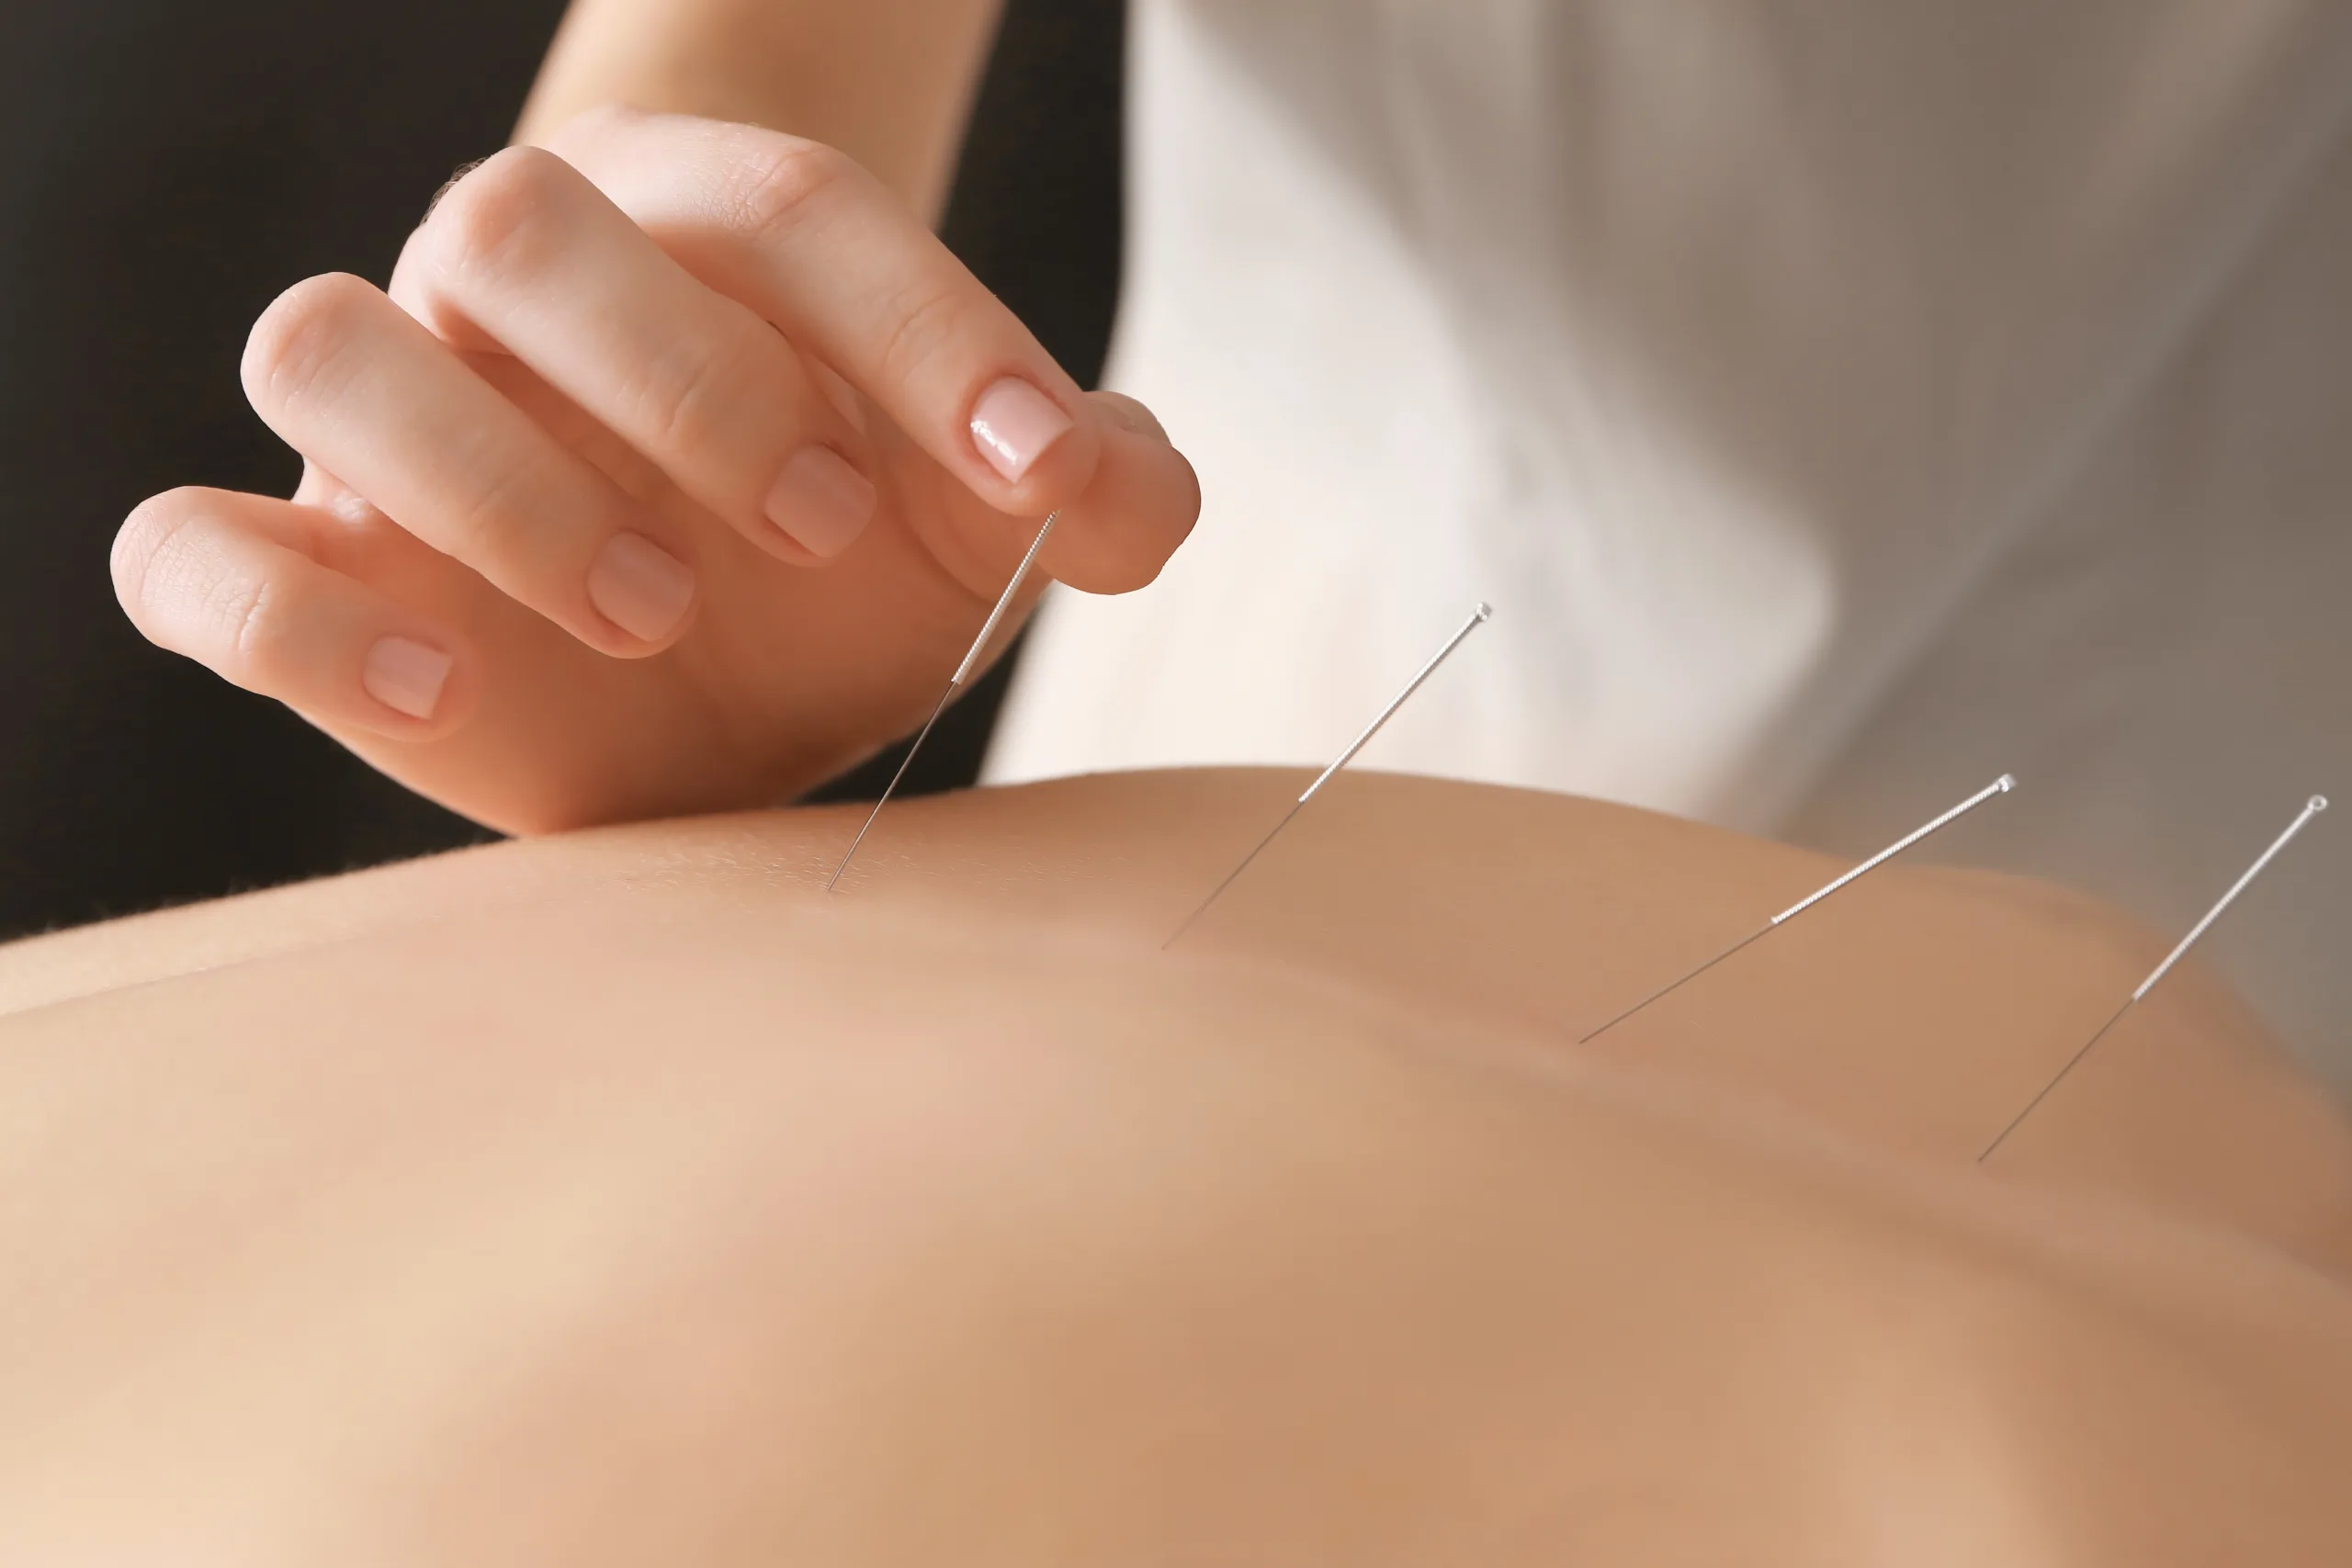 Akupunktur i ryg